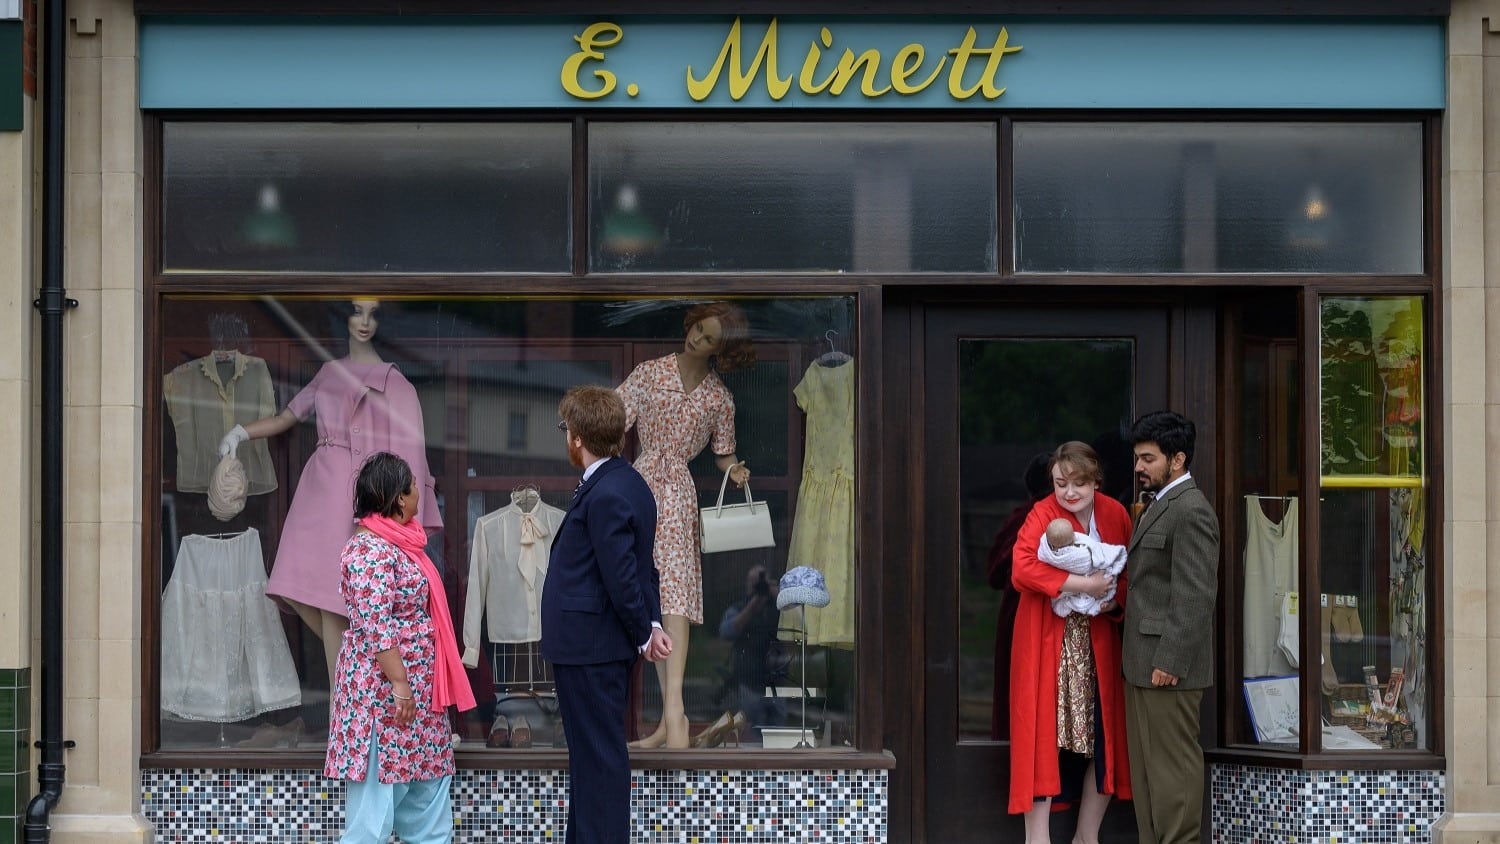 Storefront of E. Minett's Ladieswear